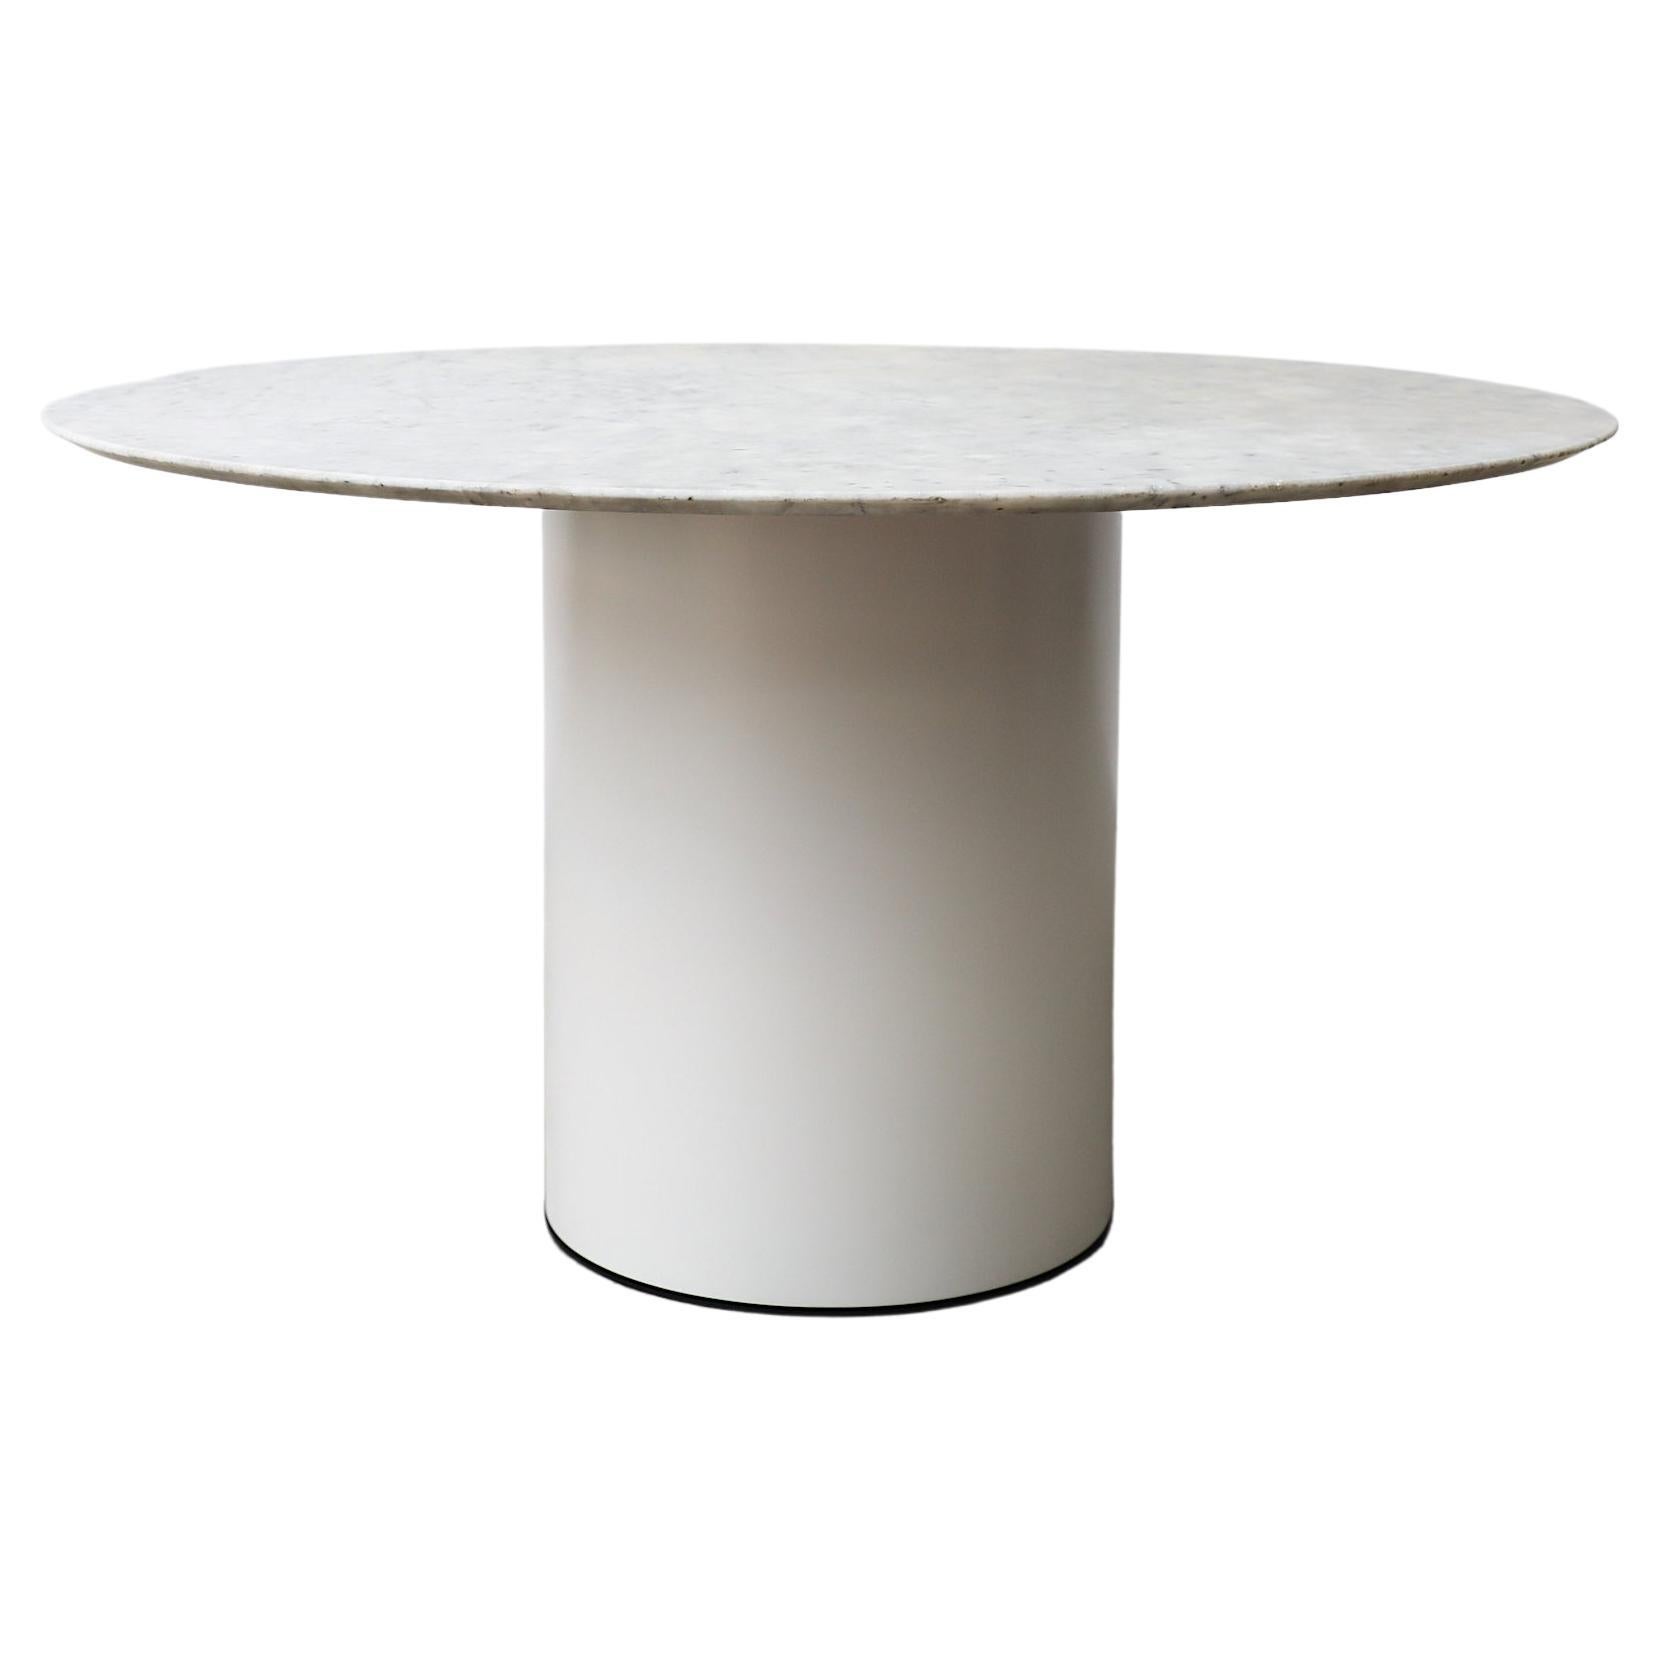 Metaform Round Carrara Marble Table with White Enameled Metal Pedestal Base For Sale